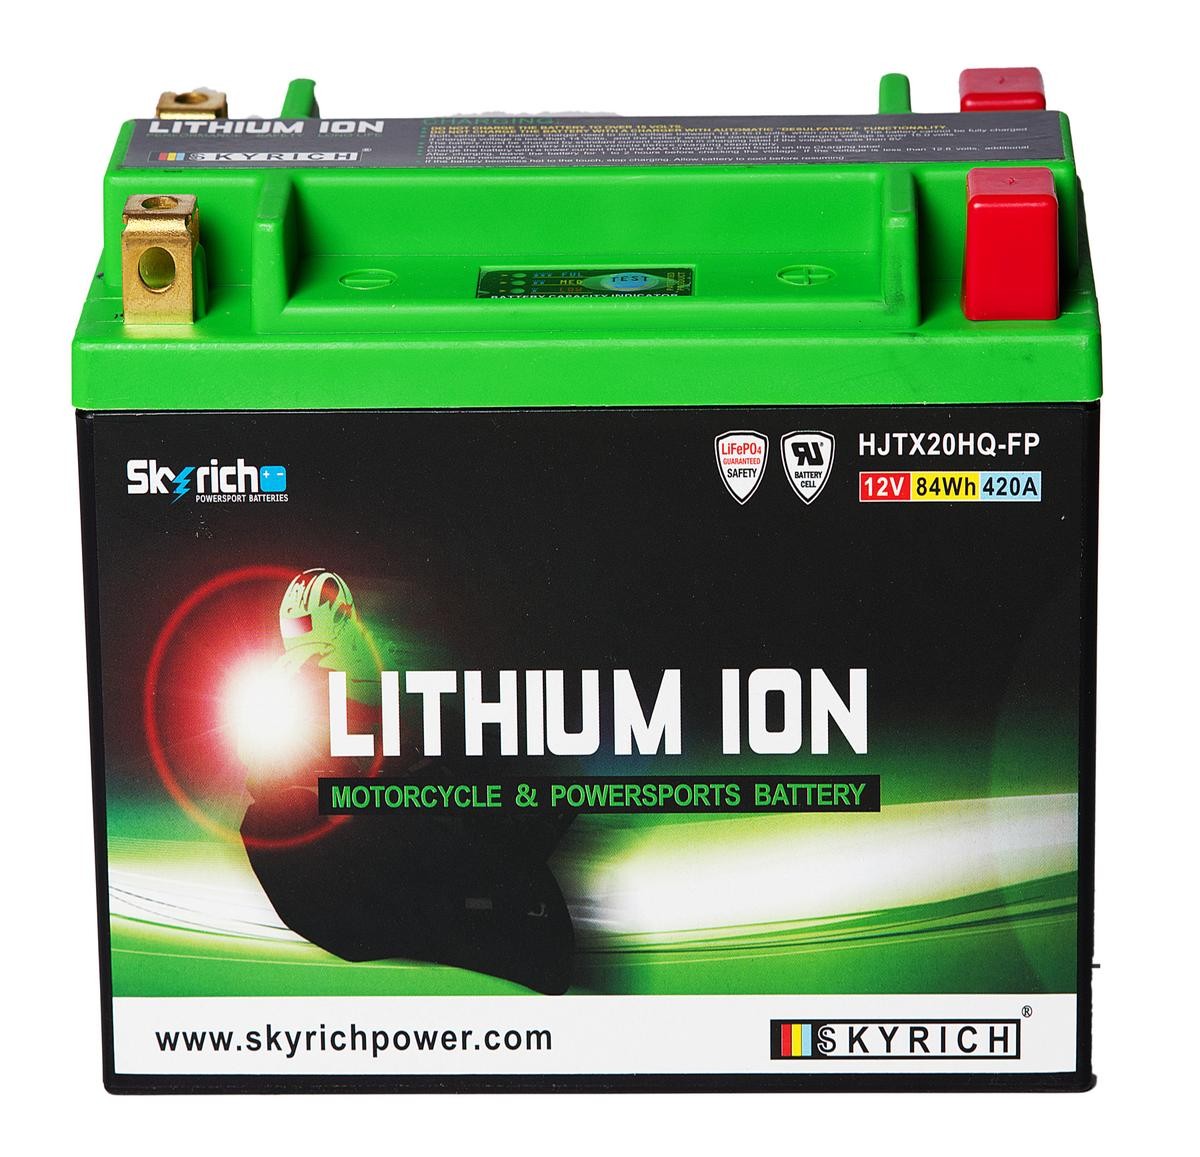 CAGIVA GRAN CANYON Batterie 12V 7Ah 420A N Li-Ionen-Batterie SKYRICH LITHIUM ION HJTX20HQ-FP